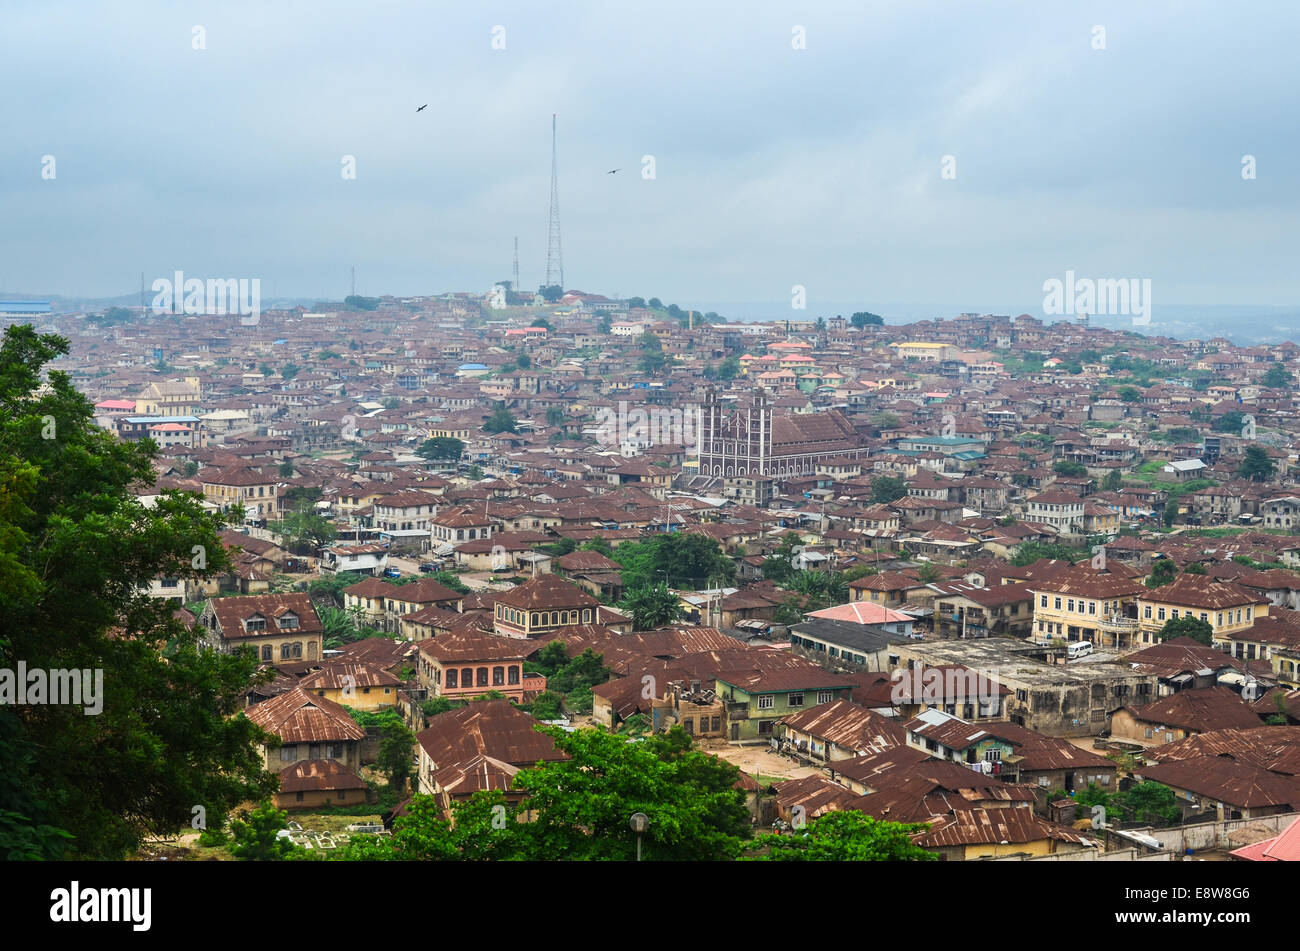 aerial-view-of-the-city-of-abeokuta-ogun-state-south-west-nigeria-E8W8G6.jpg